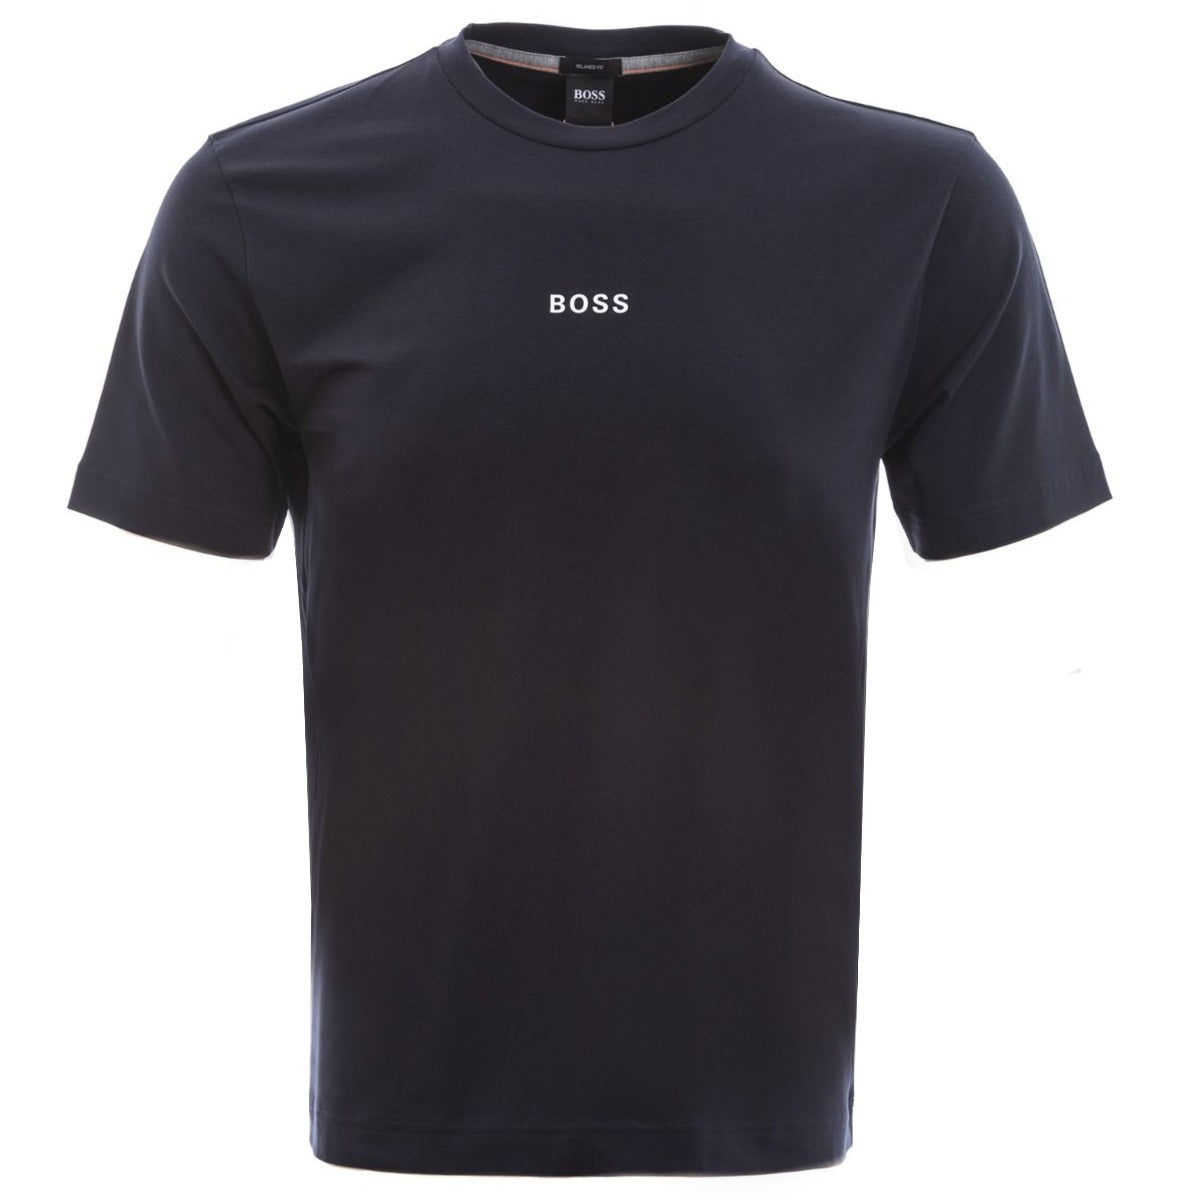 BOSS TChup 1 T Shirt in Dark Blue Main